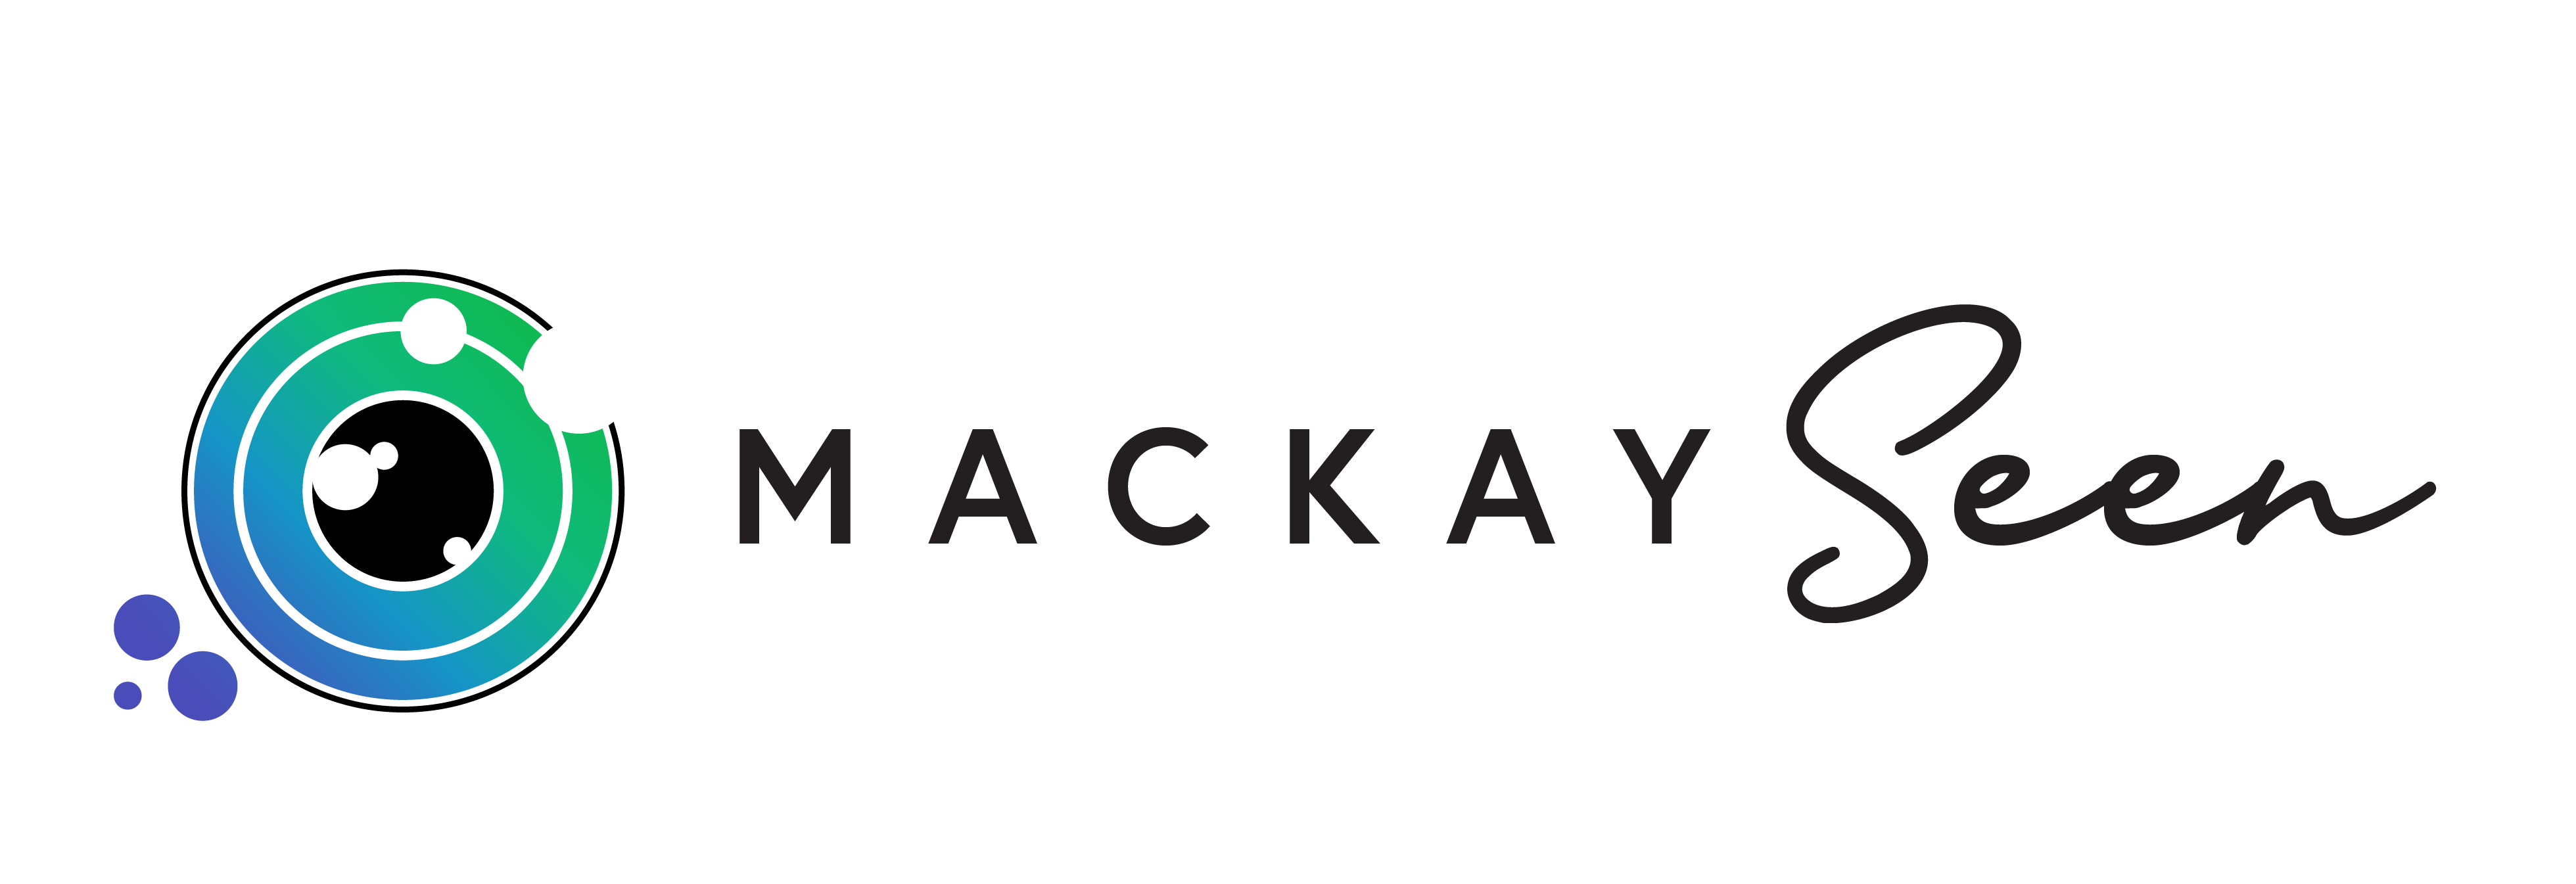 Mackay Seen